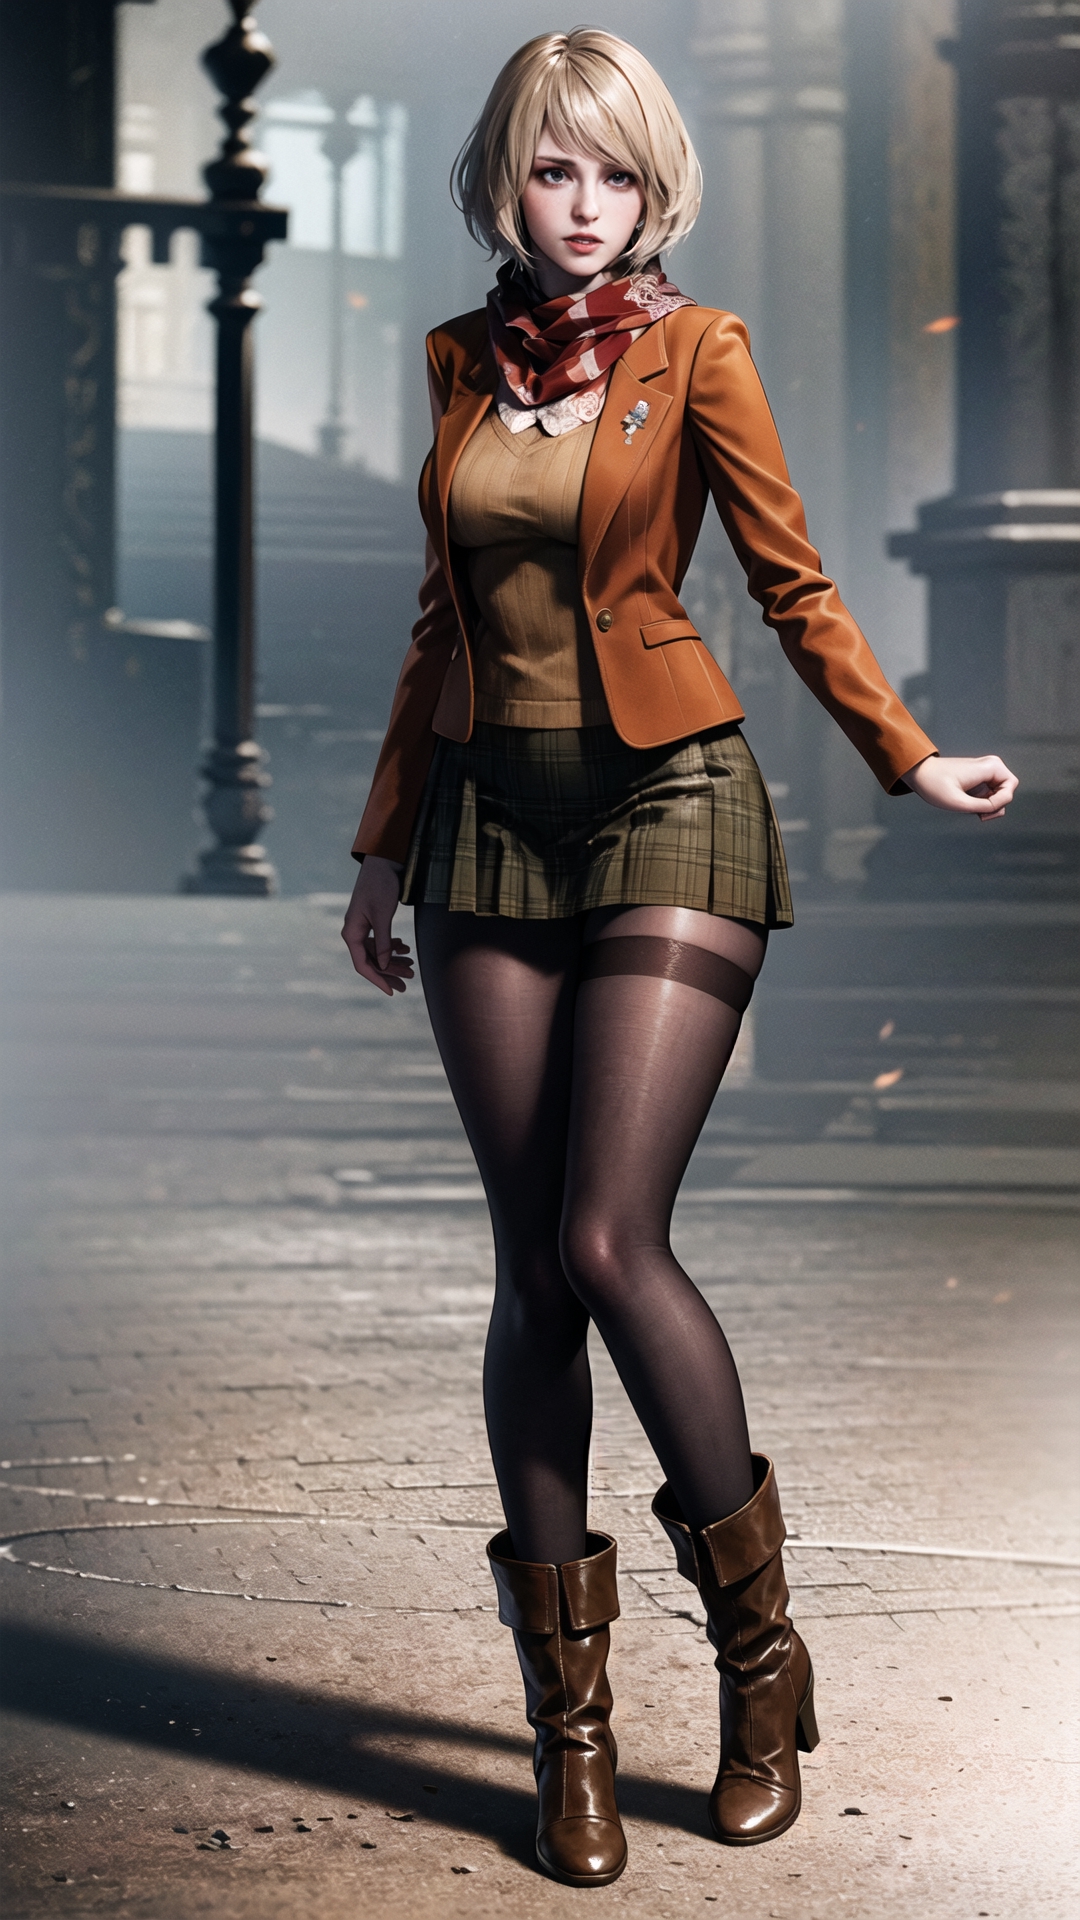 SXZ Ashley Graham - Ella Freya [ Resident Evil ] - sxz-ashley-graham, Stable Diffusion LoRA